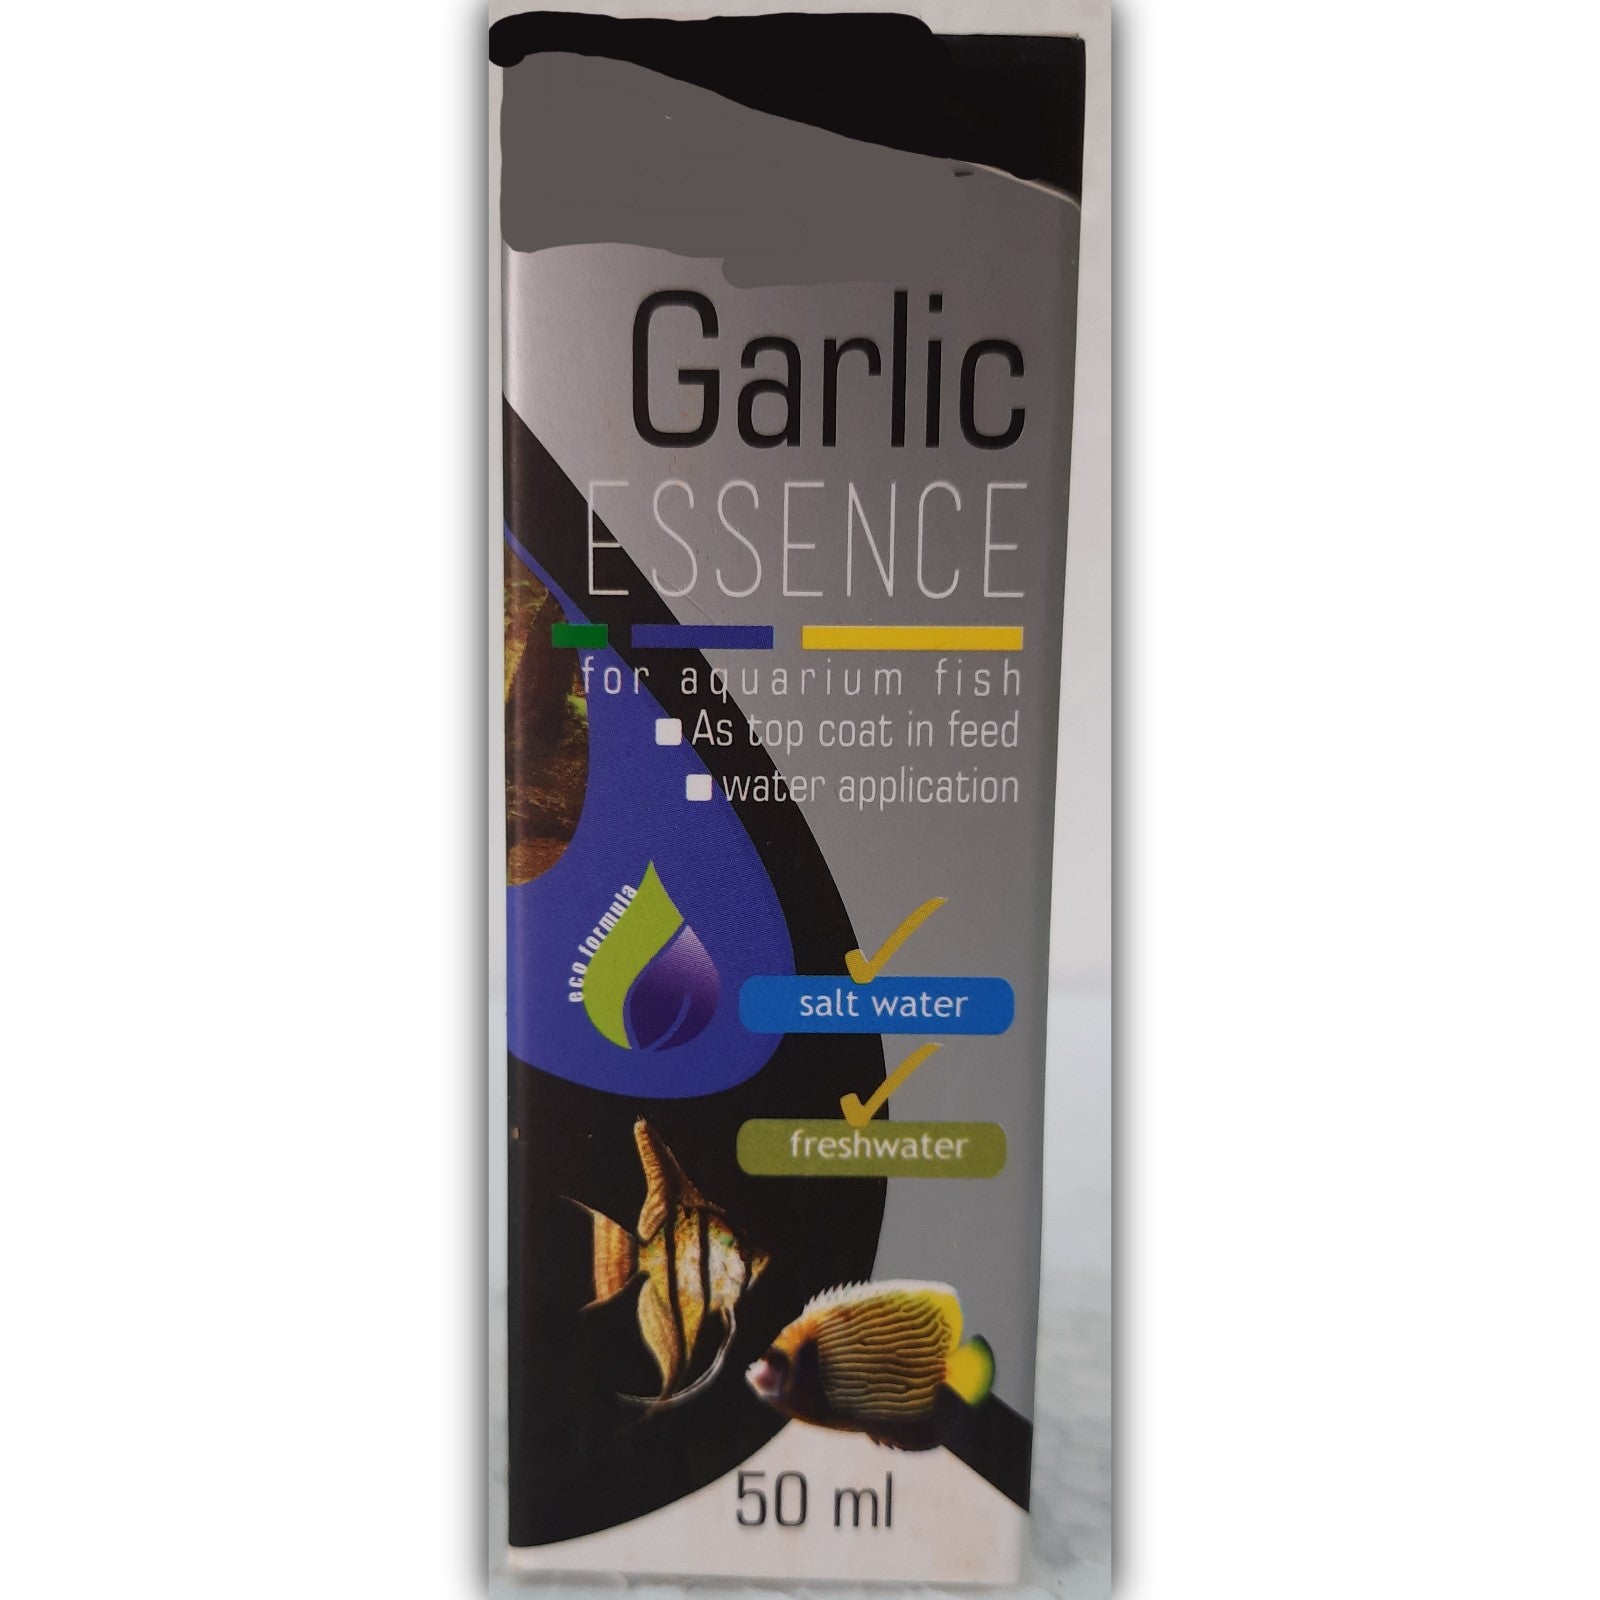 Wild Garlic Essence 50 ml from Aquatic Remedies